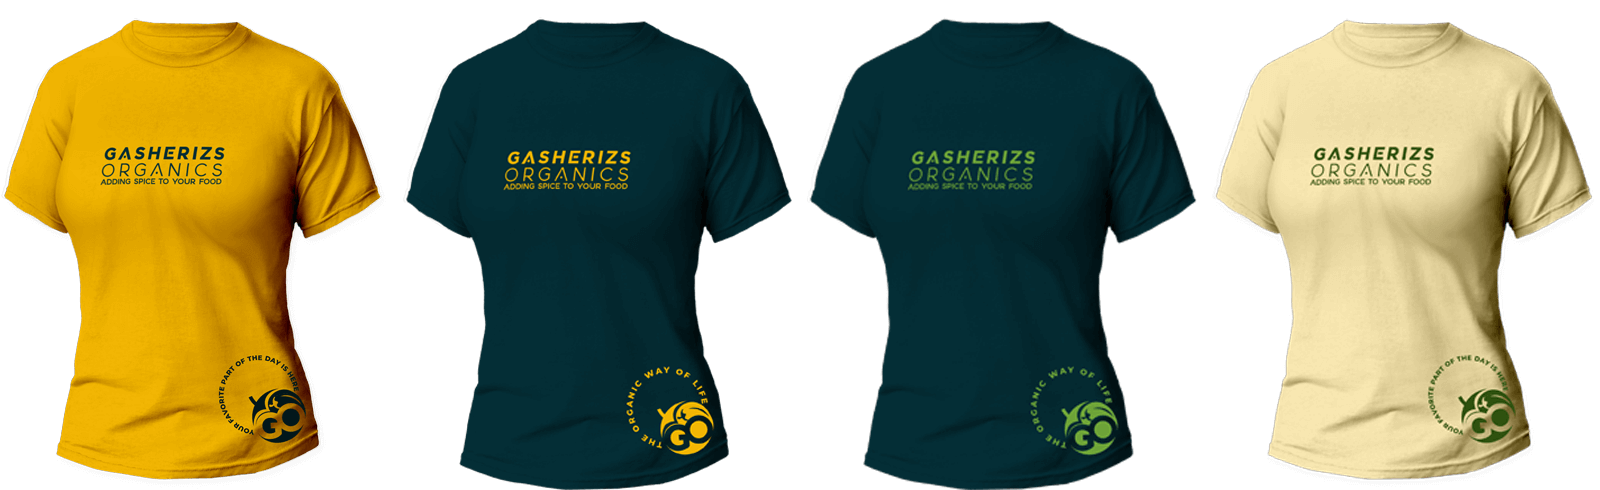 GaSherizs Organics Brand Identity T-Shirts Design Opti